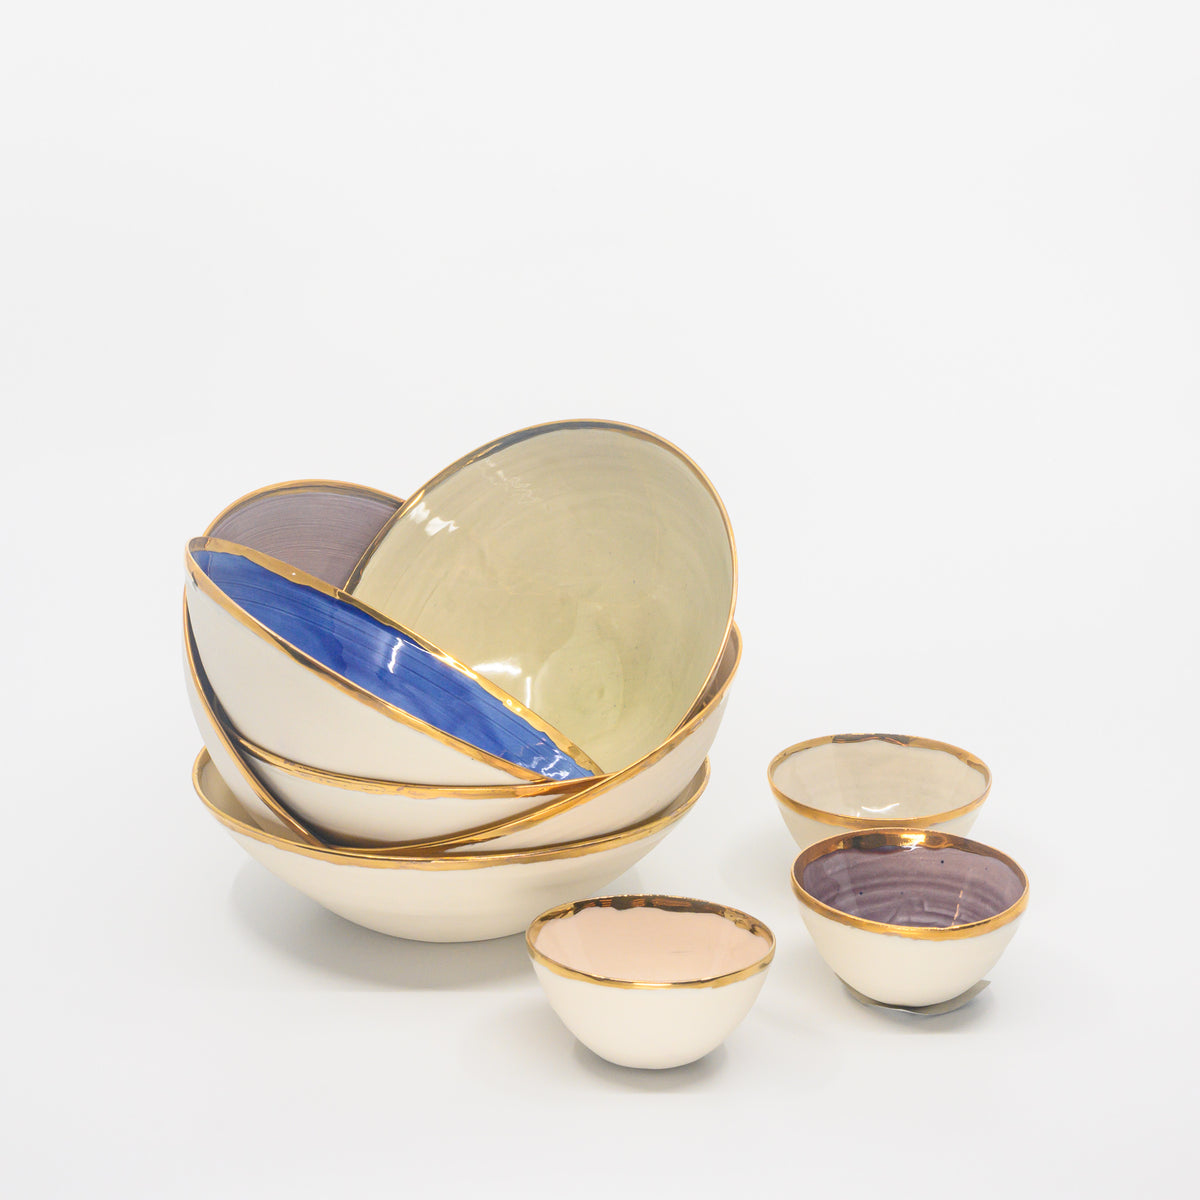 Porcelain bowl with gold rim